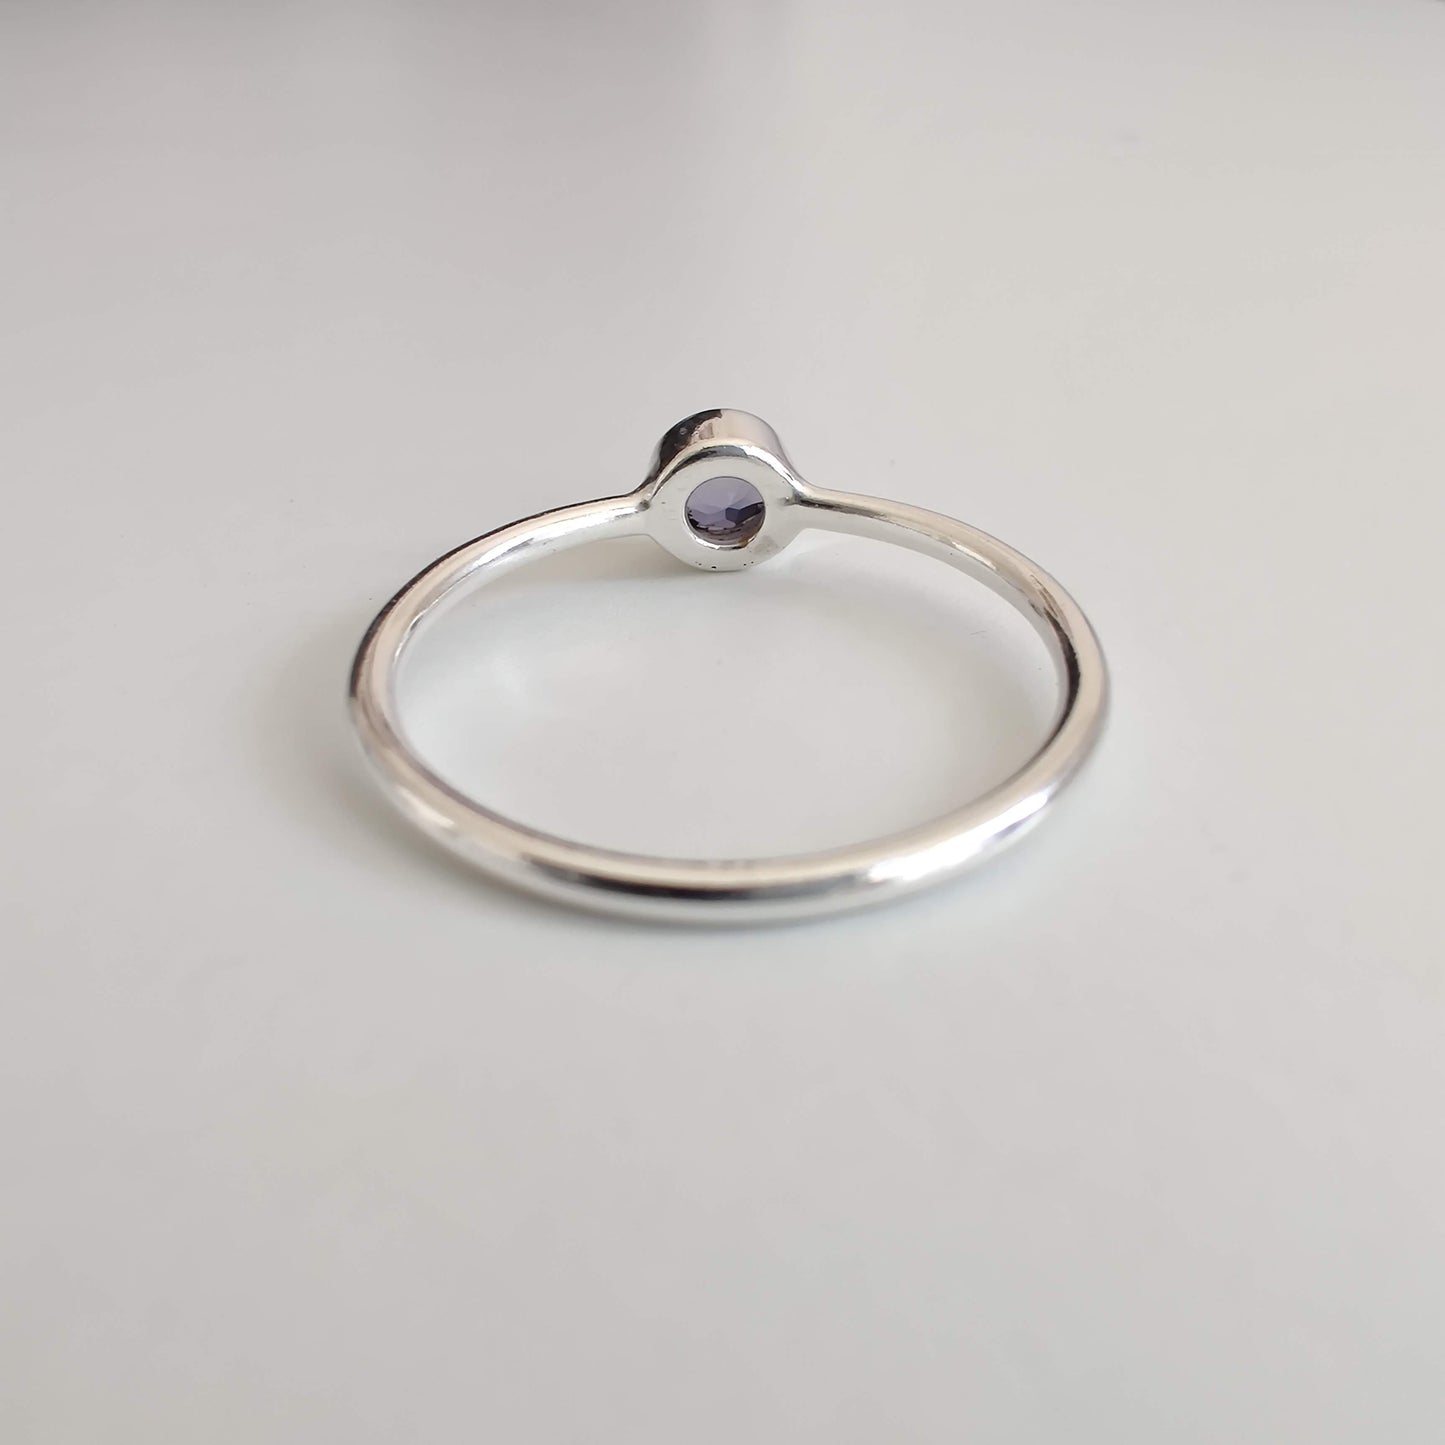 Iolite Delicate 925 Sterling Silver Ring - Rivendell Shop